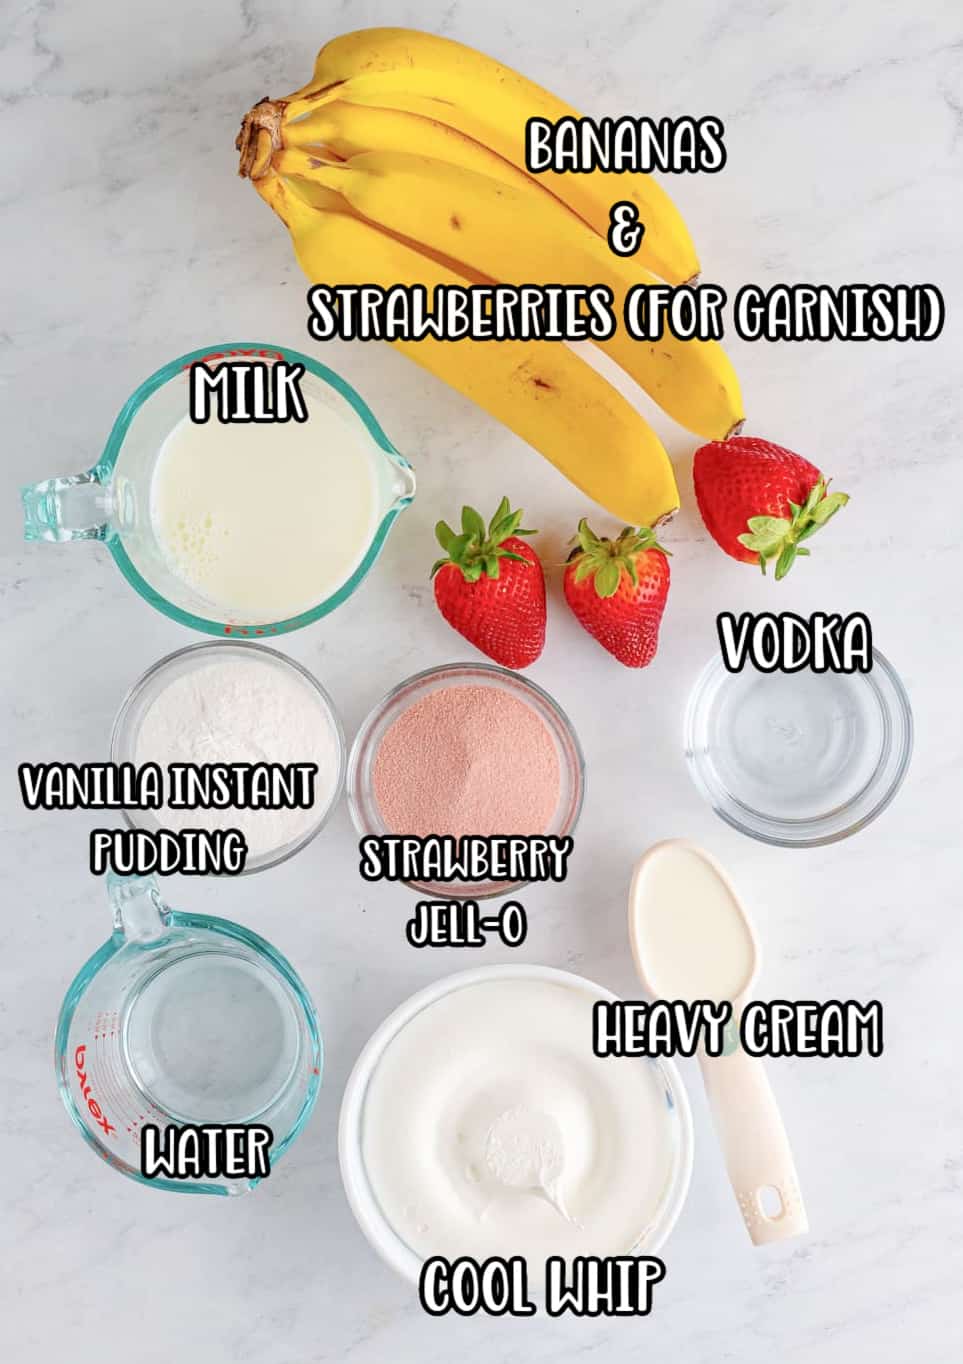 Strawberry Jello, Banana cream Pudding mix, heavy cream, water, vodka, banana, strawberries, and whipped topping.